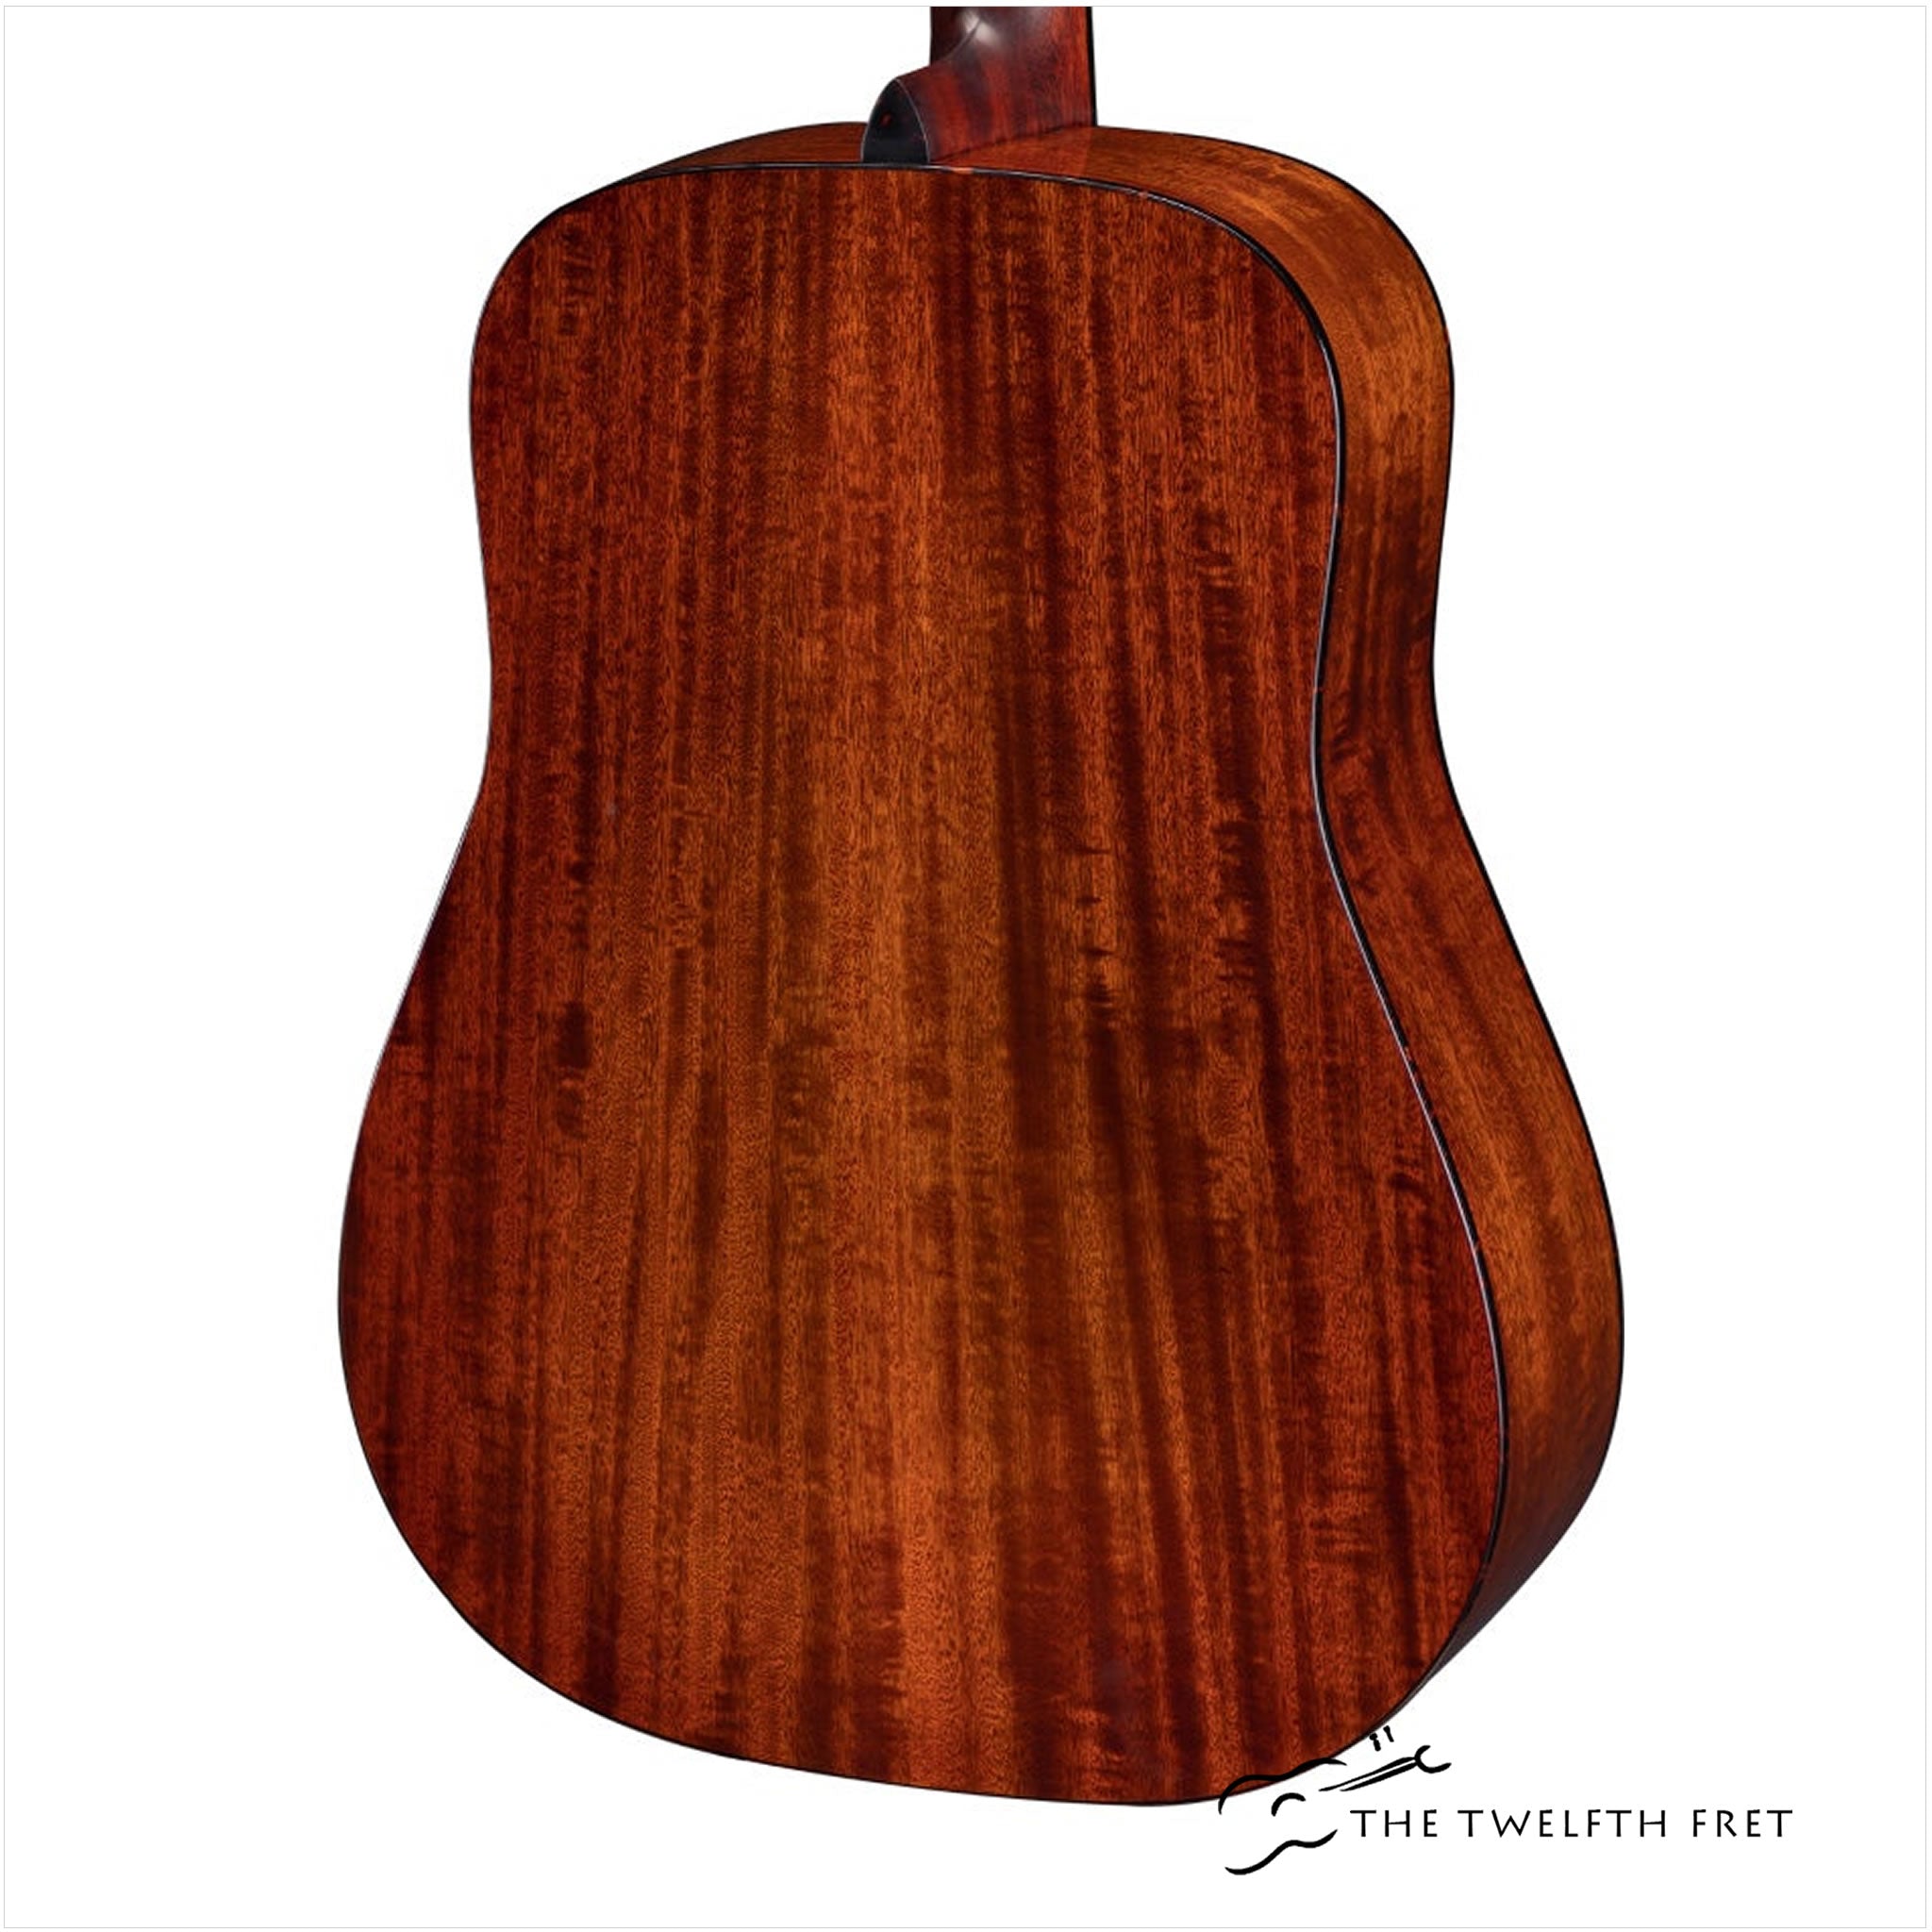 Eastman E10D-TC Acoustic Guitar - The Twelfth Fret